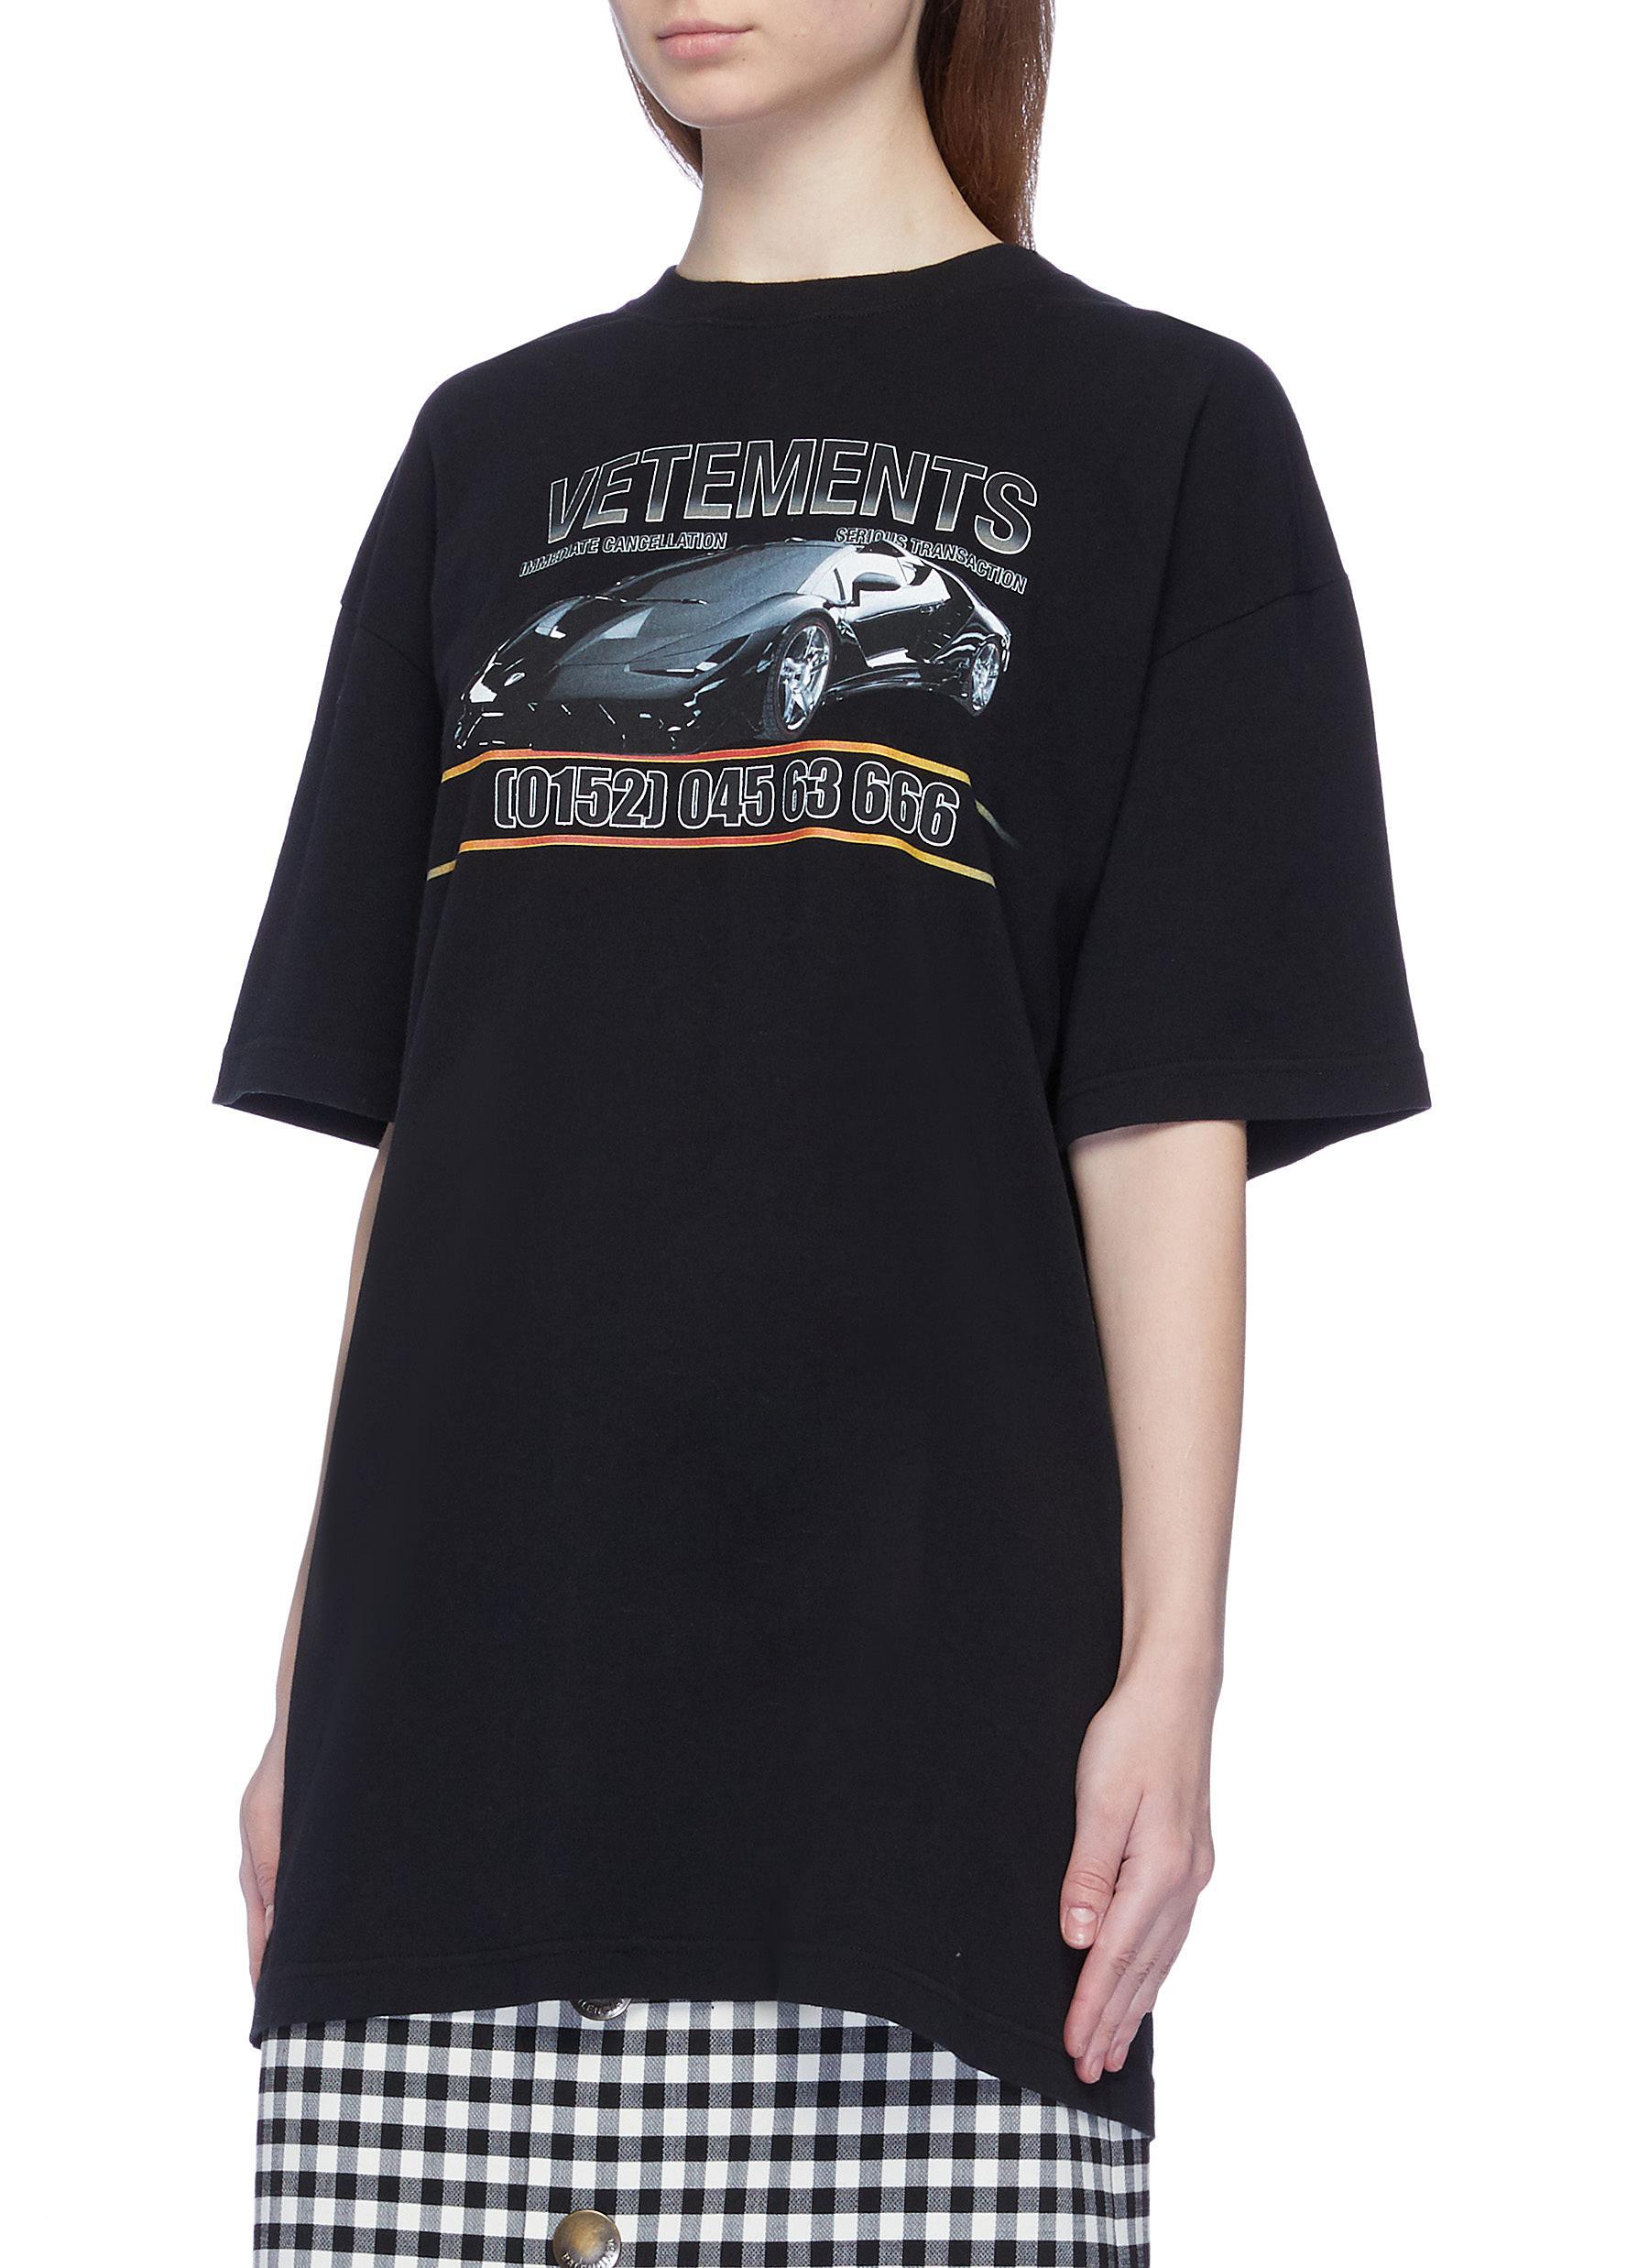 Vetements Cotton Car Hotline T-shirt in Black for Men - Lyst